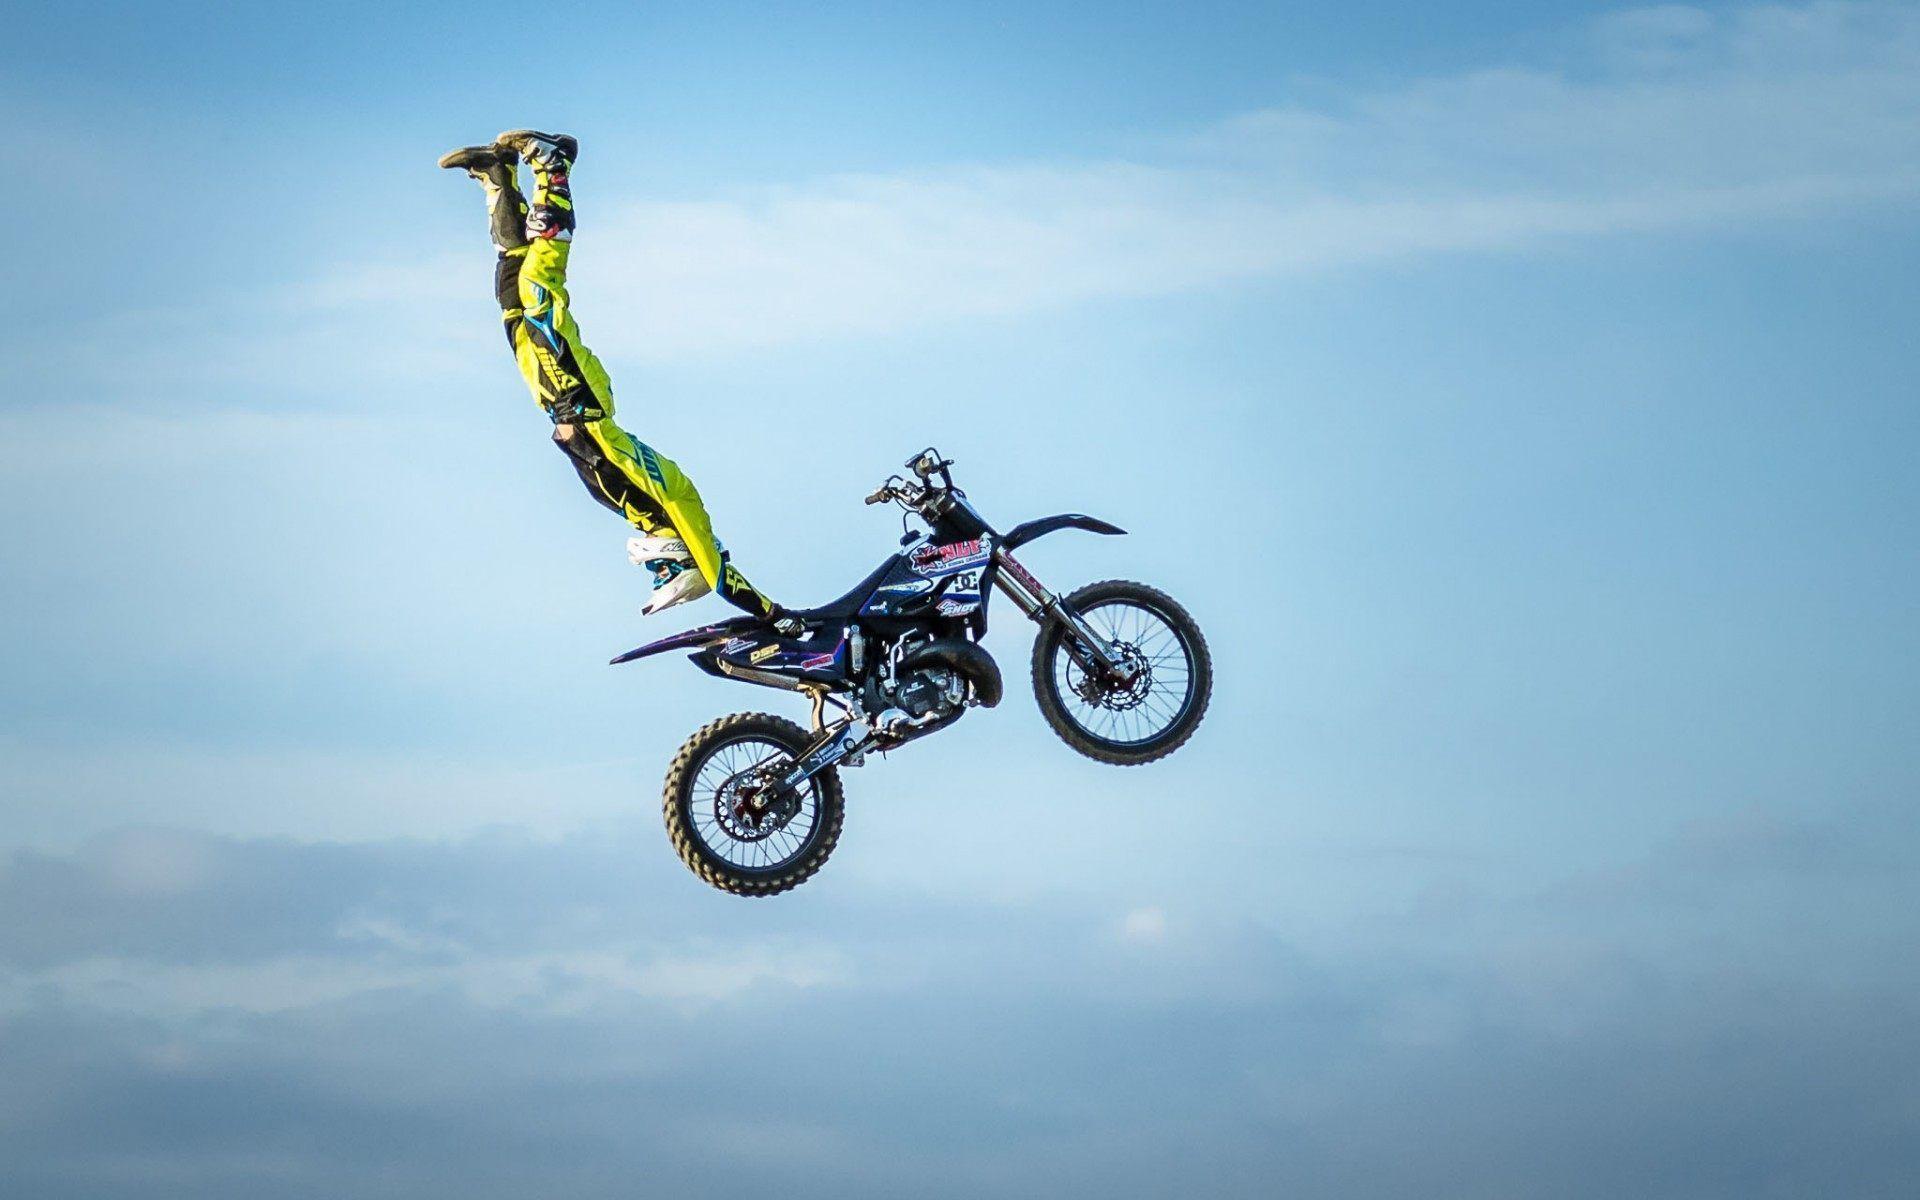 Motocross Bike High Jump Extreme Sports High Definition Wallpaper